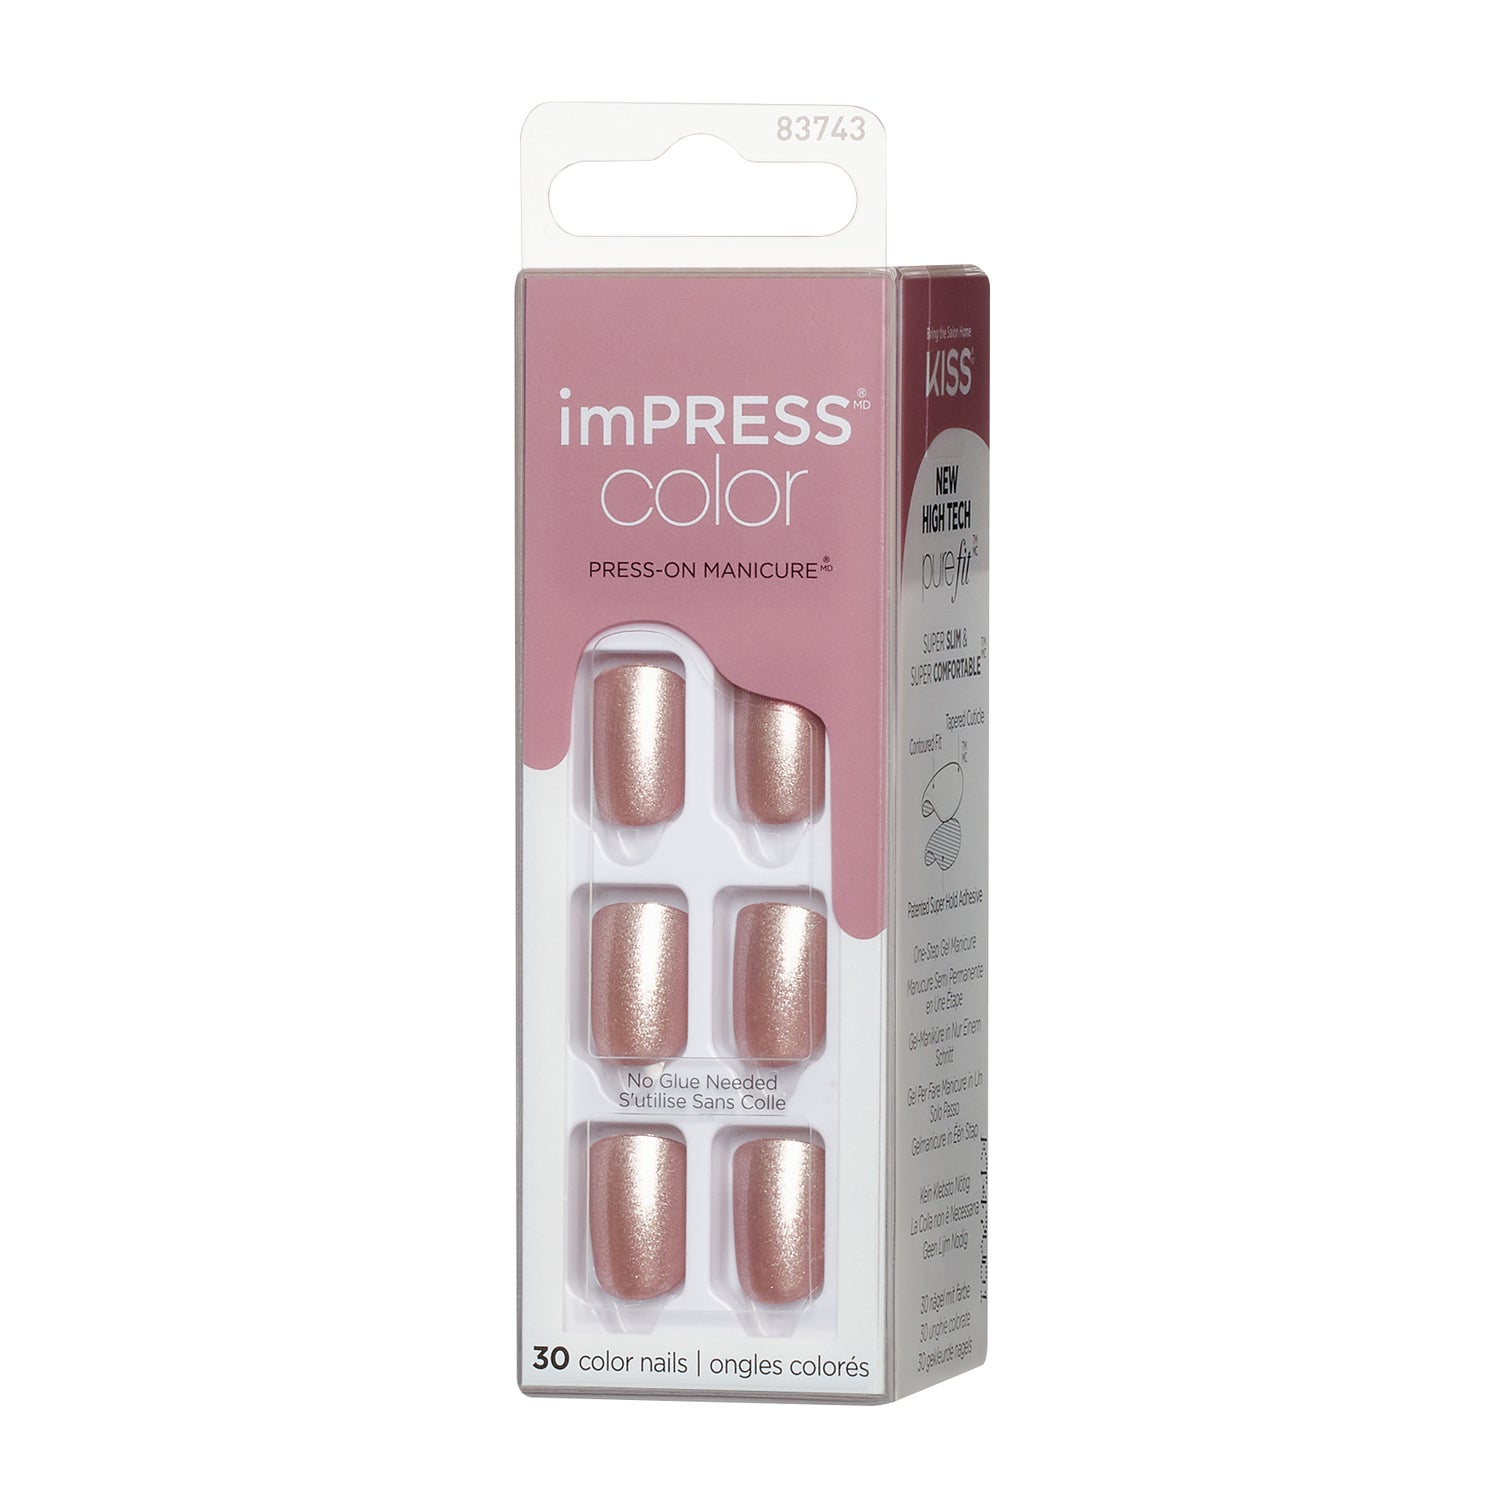 imPRESS Color Press-On Manicure - Champagne Pink